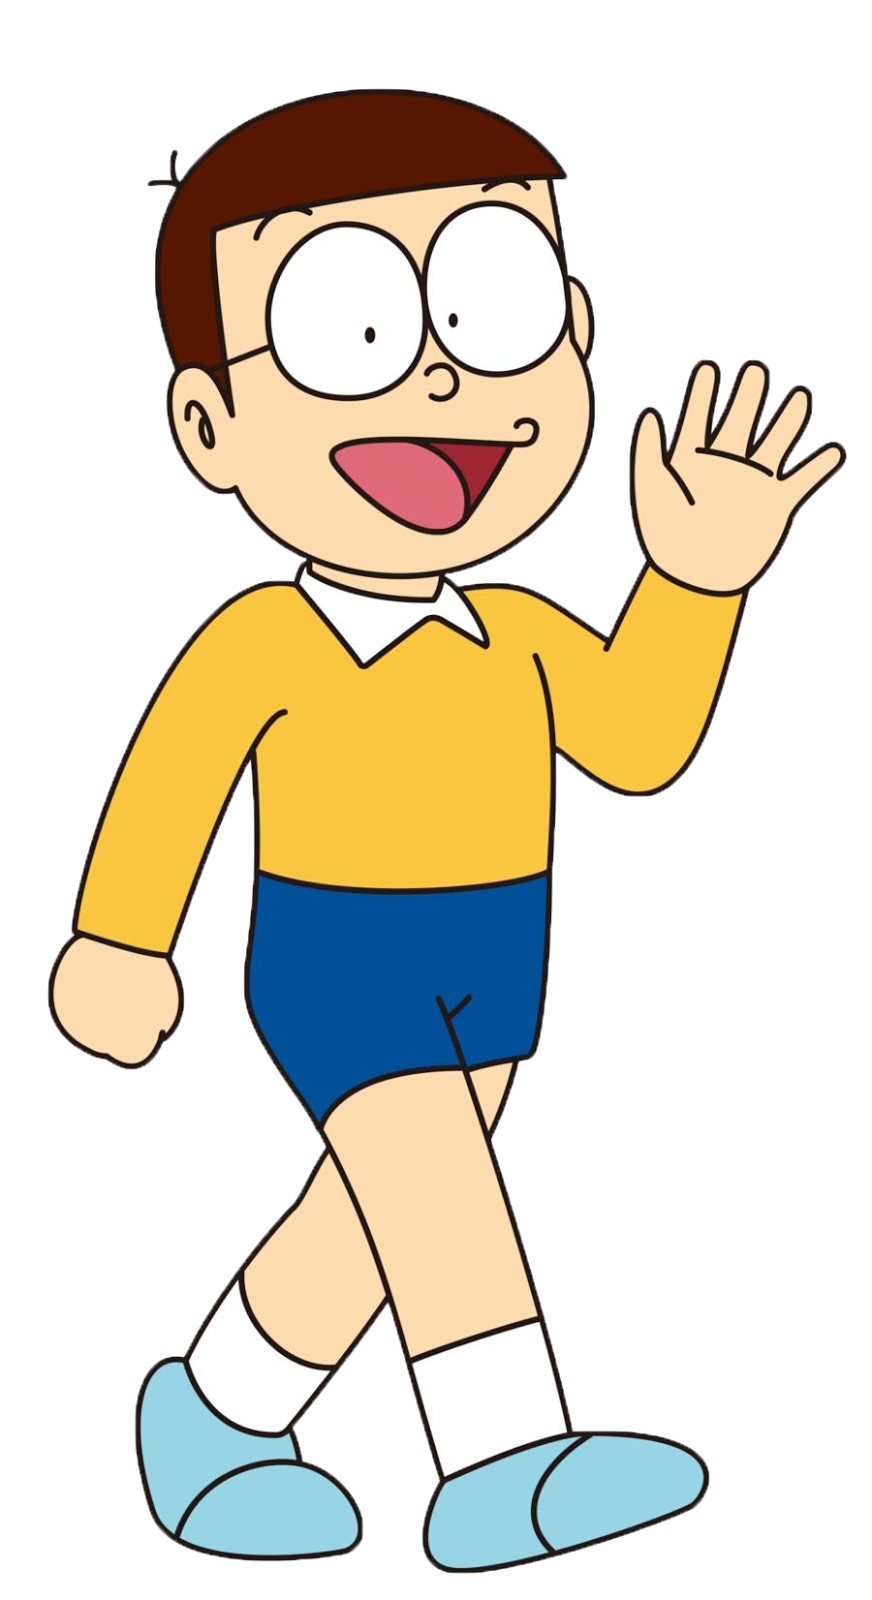 Nobita Doraemon In Short Shorts, say hello, hands, cartoon characters doraemon #40657